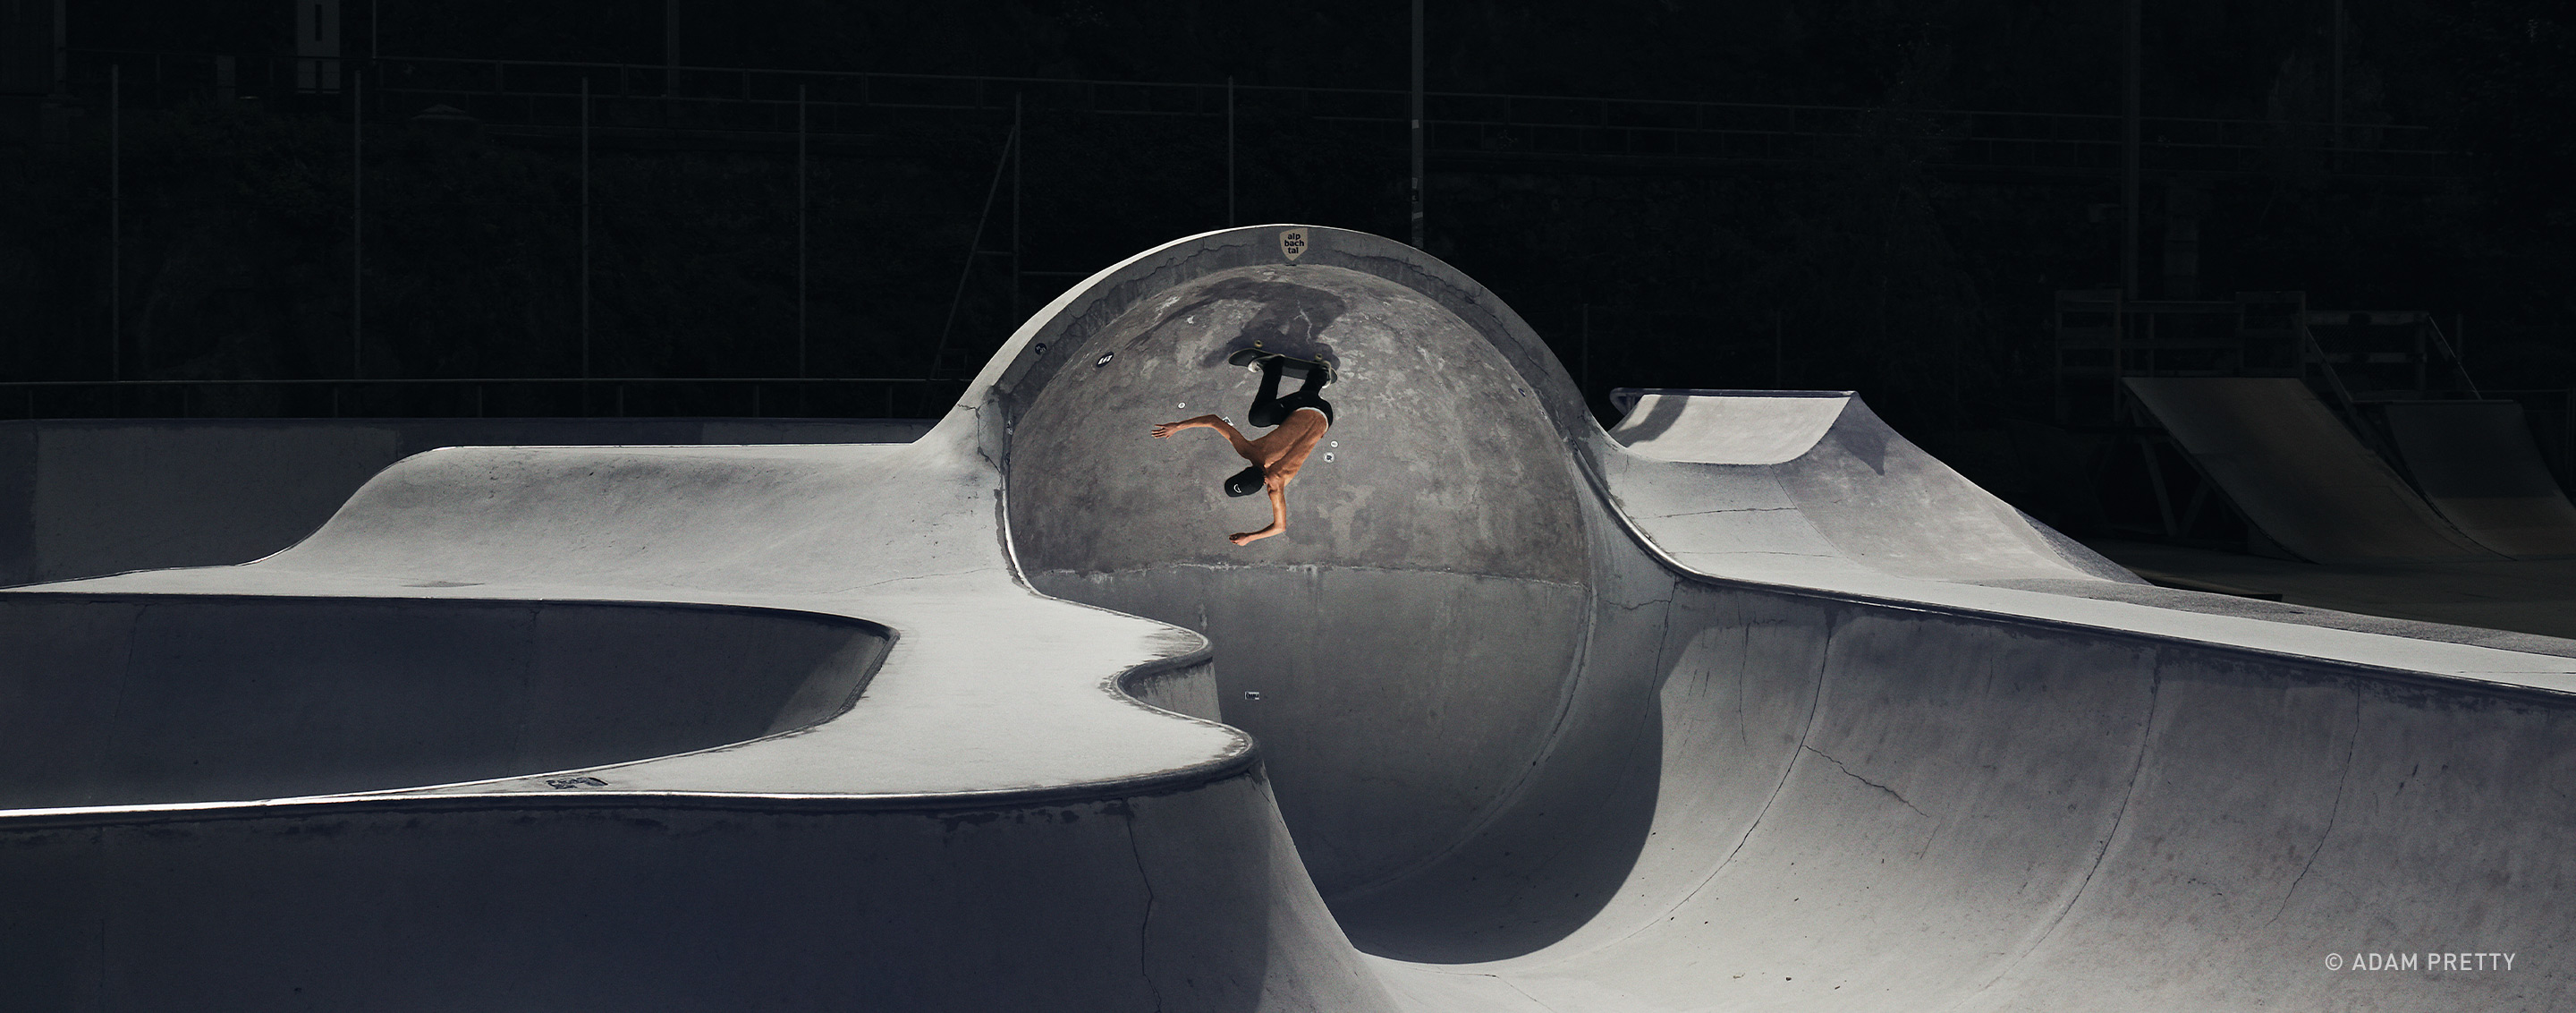 skateboarder upside down on a half pipe